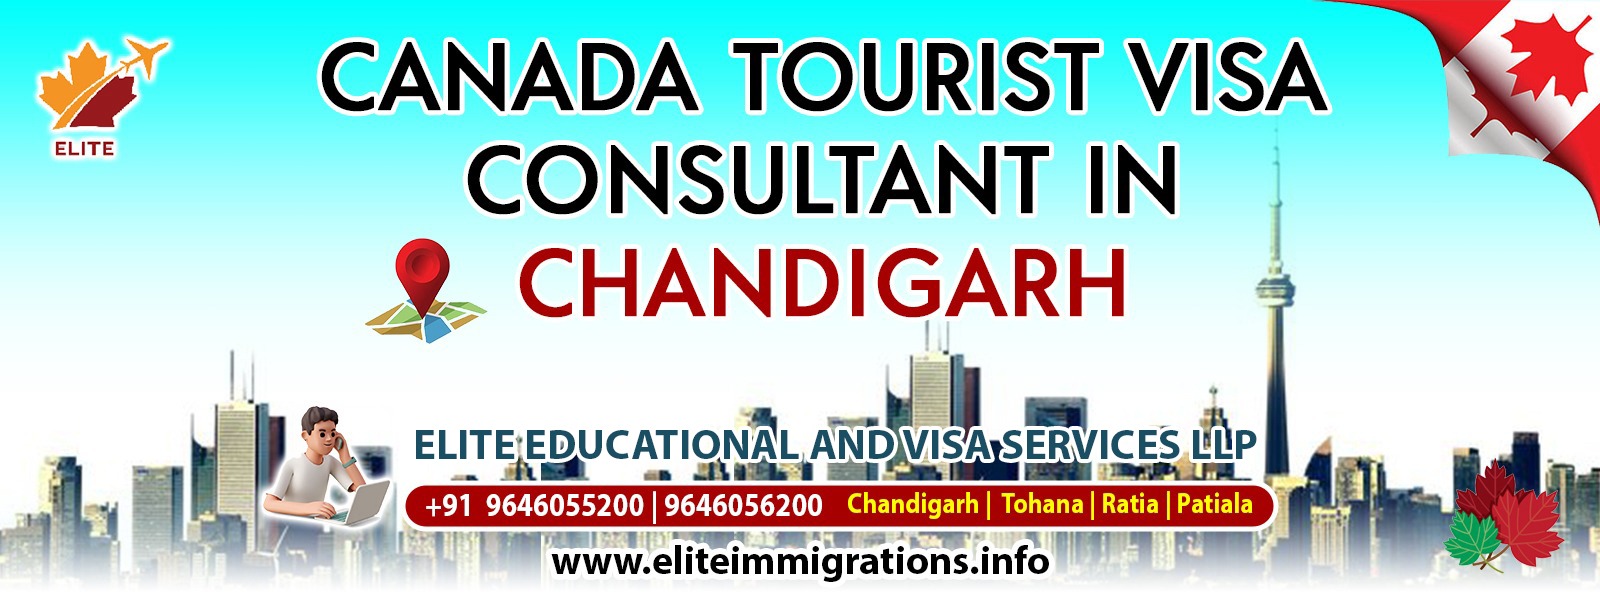 Canada Tourist Visa Consultant In Chandigarh